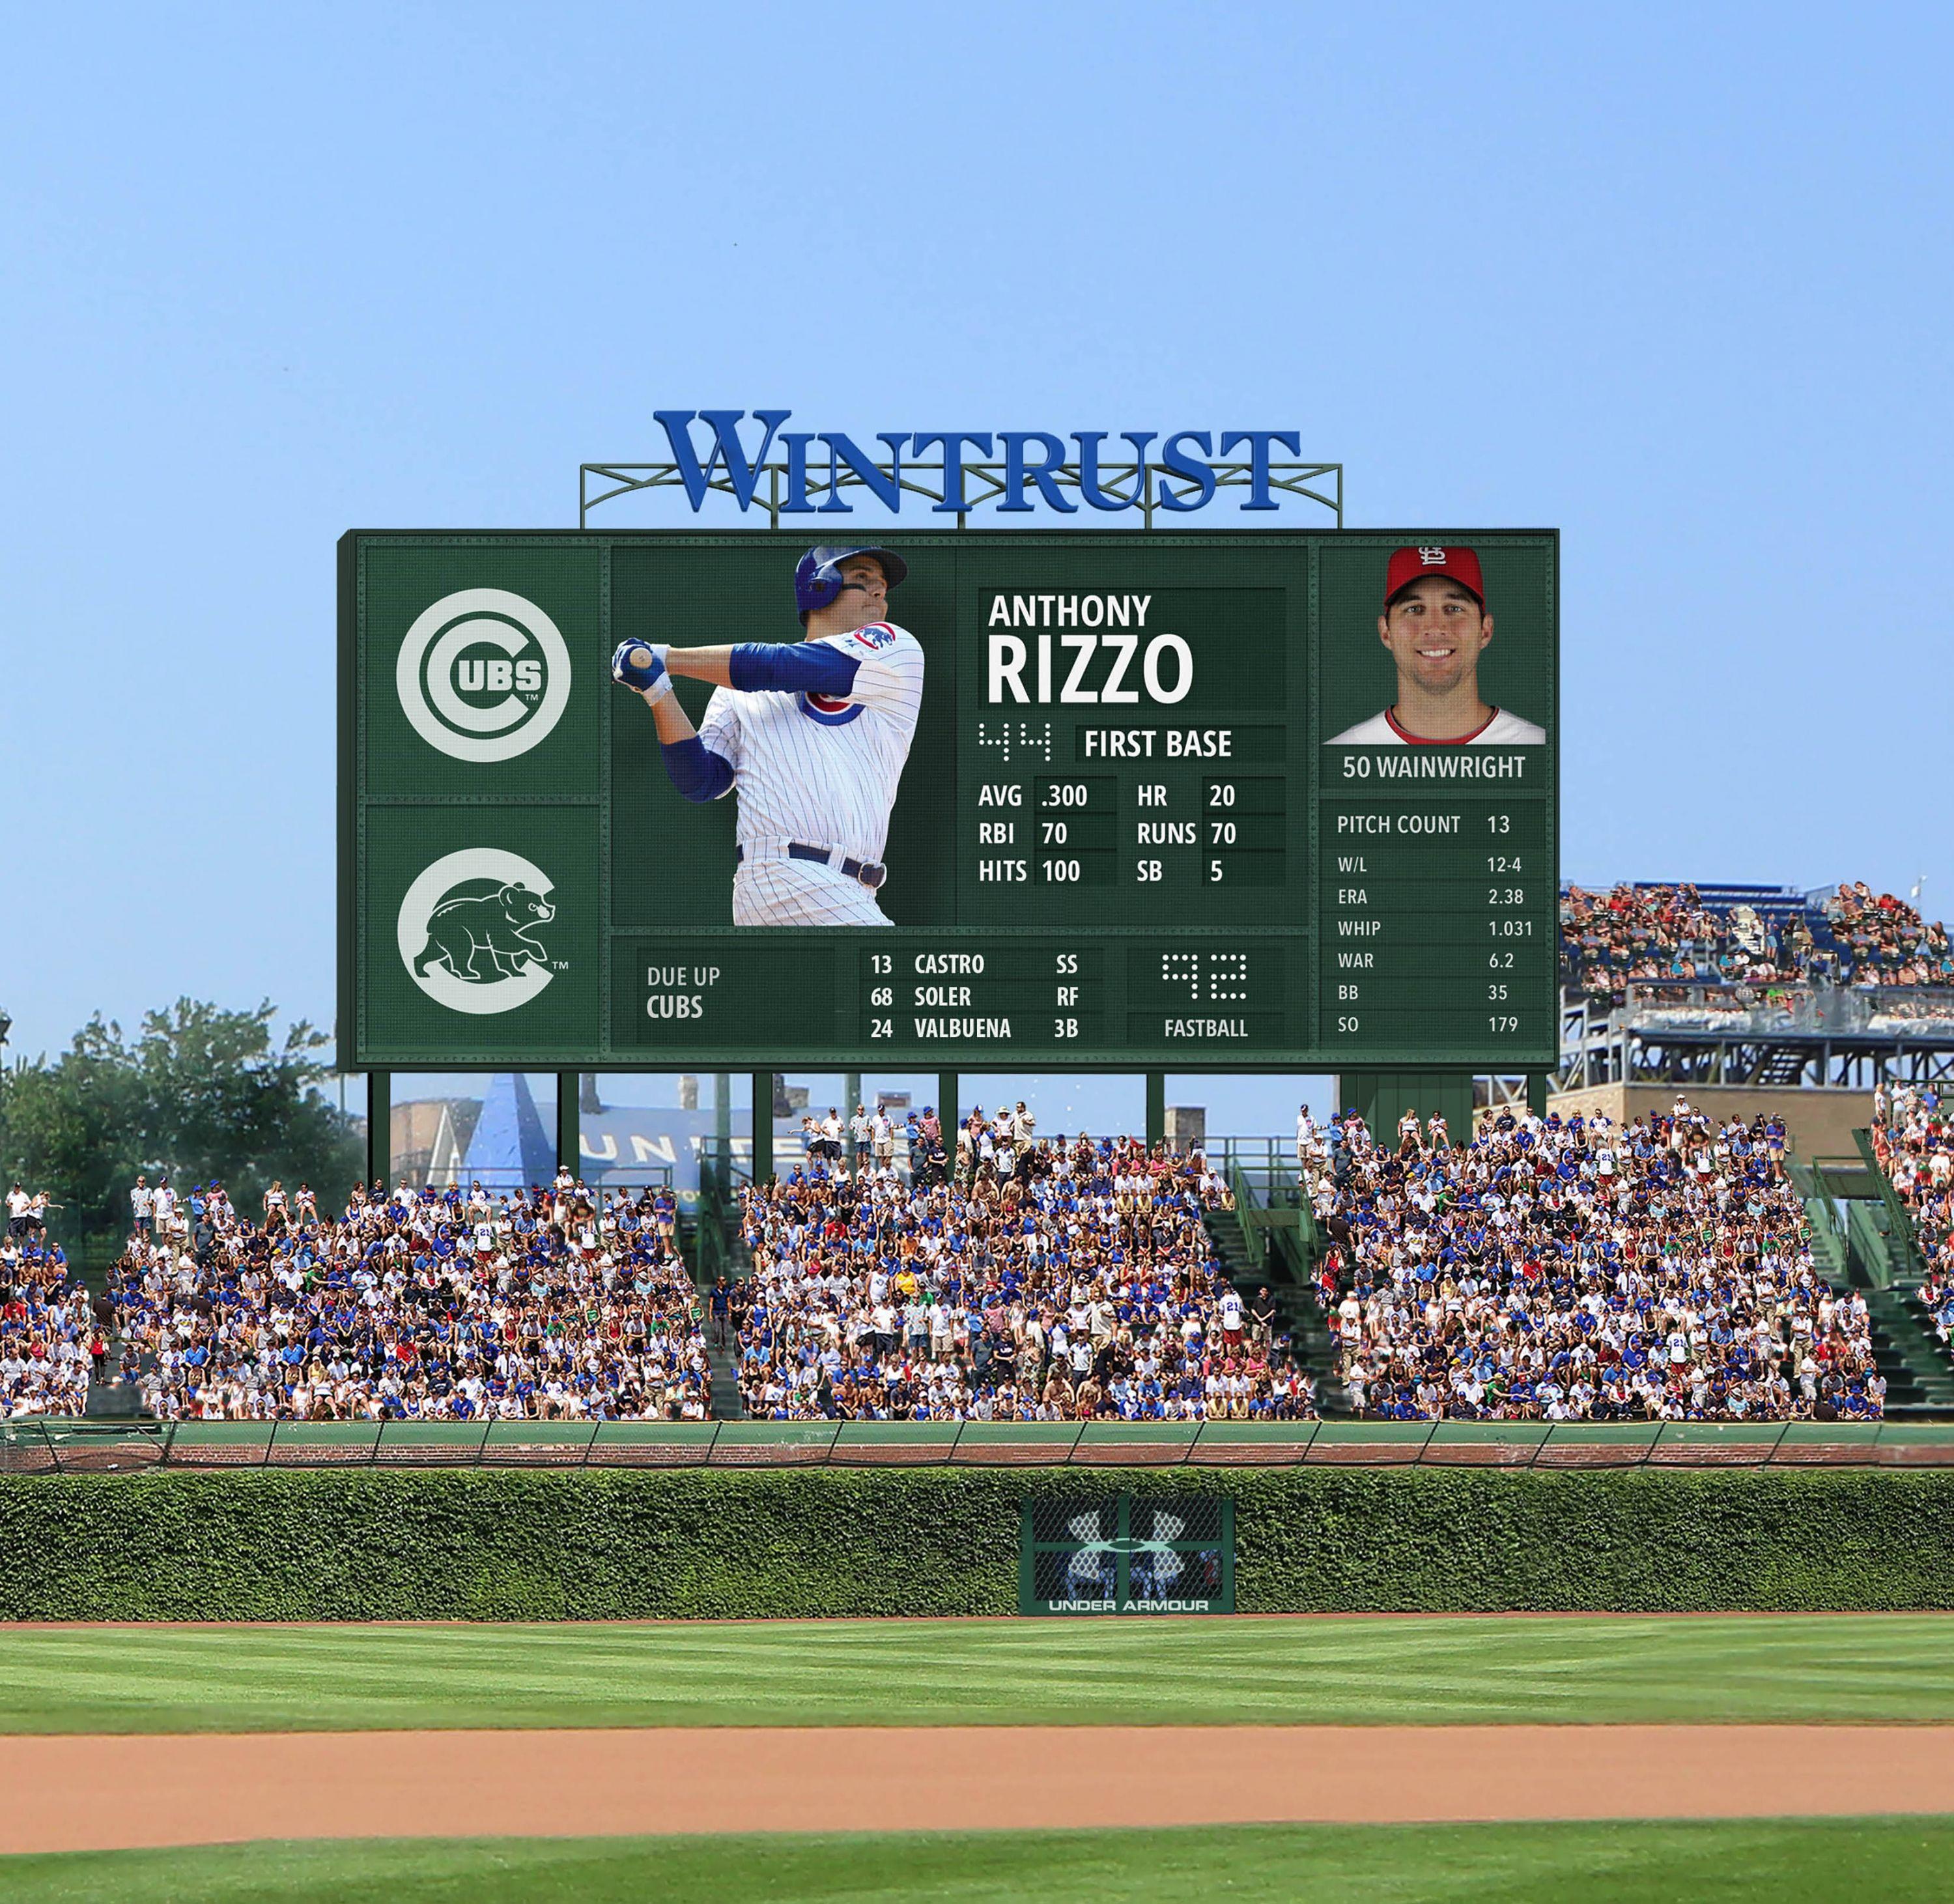 Wintrust Logo - Chicago Cubs, Wintrust ink major sponsorship deal that includes